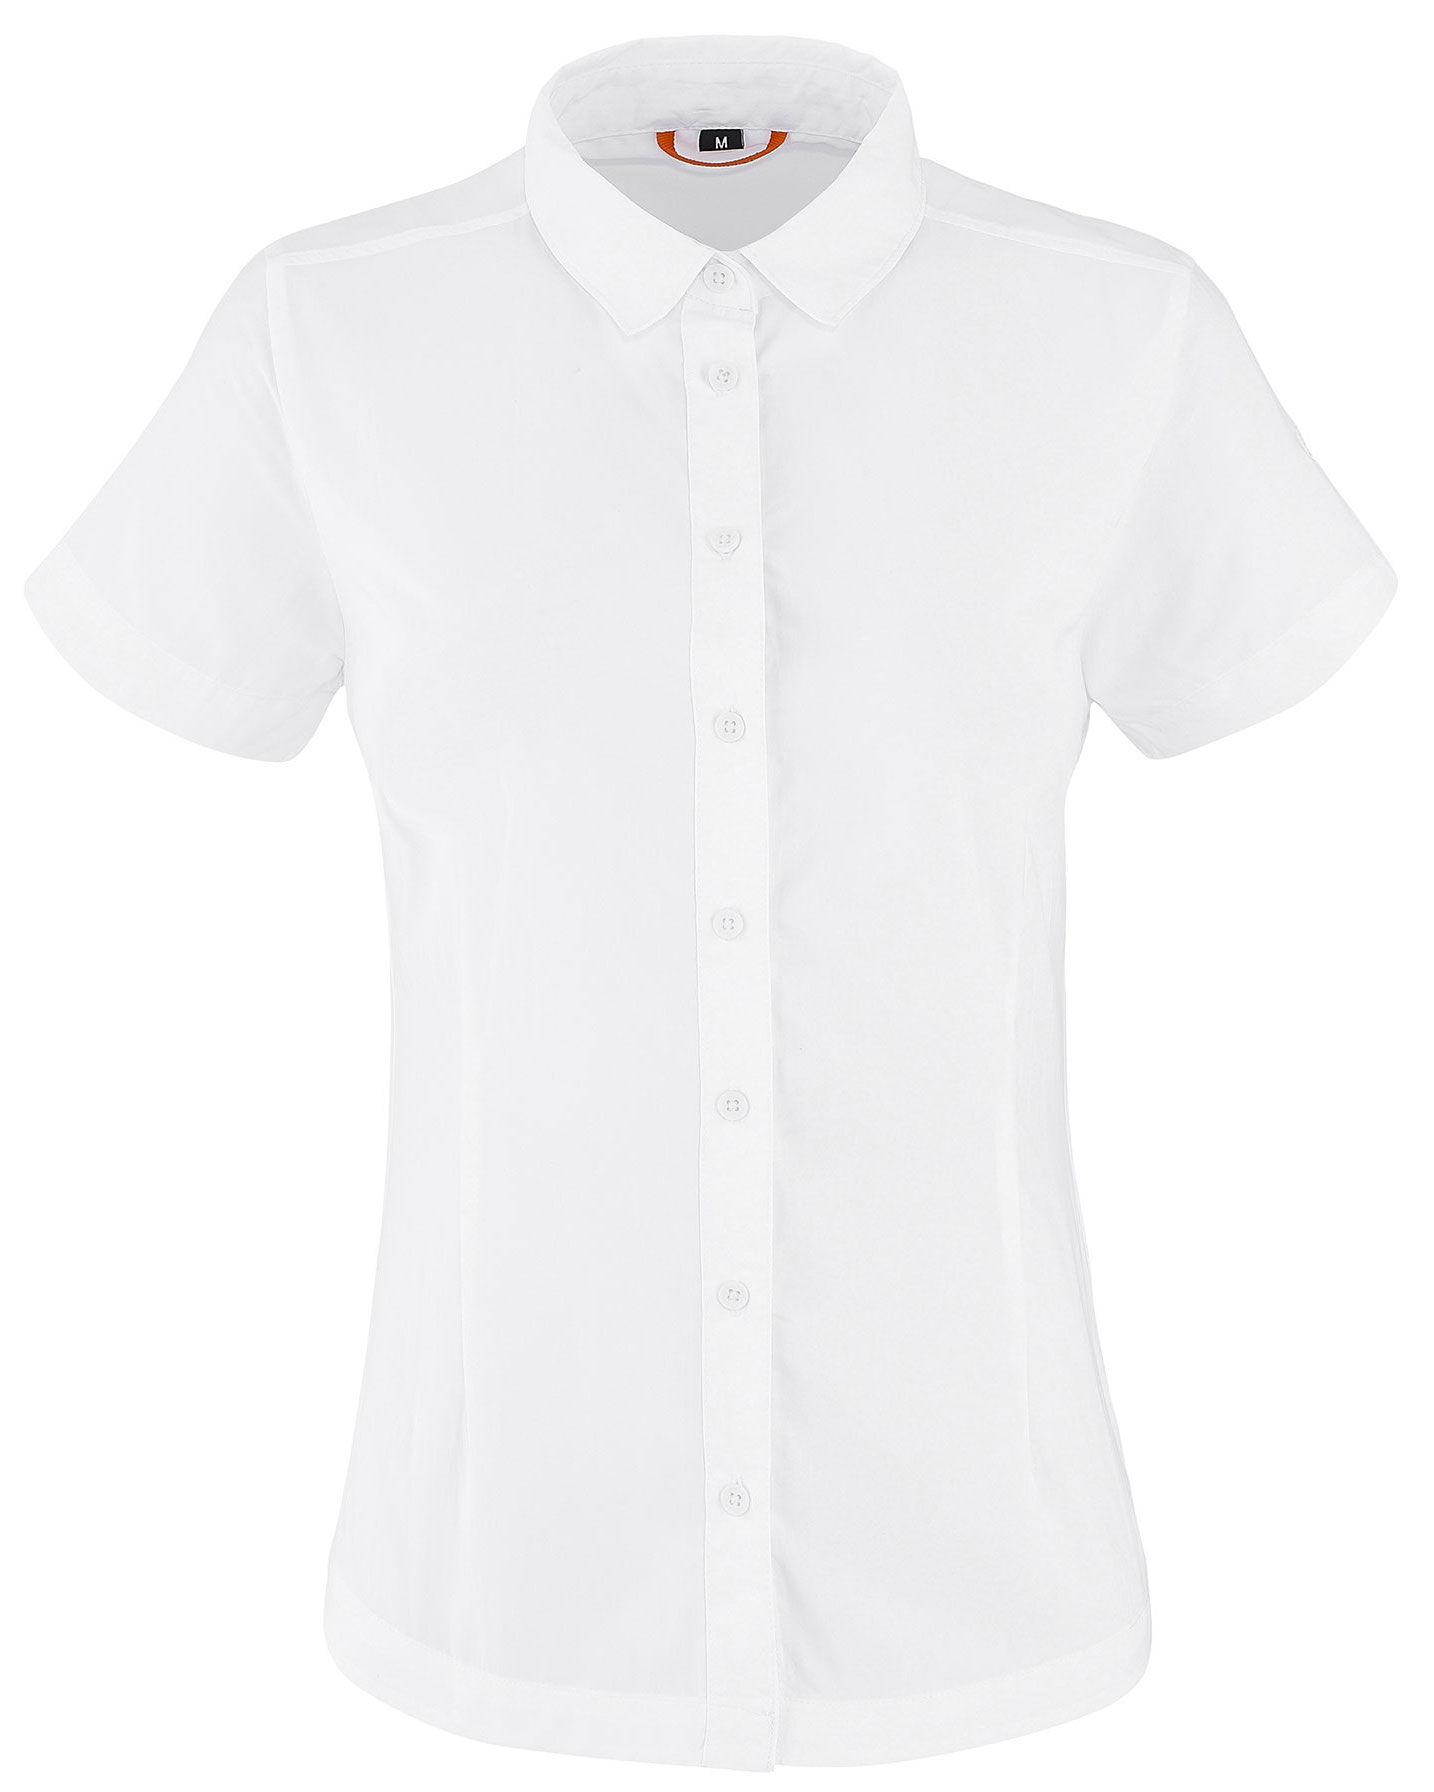 Lafuma - LD Access Shirt - Shirt - Women's